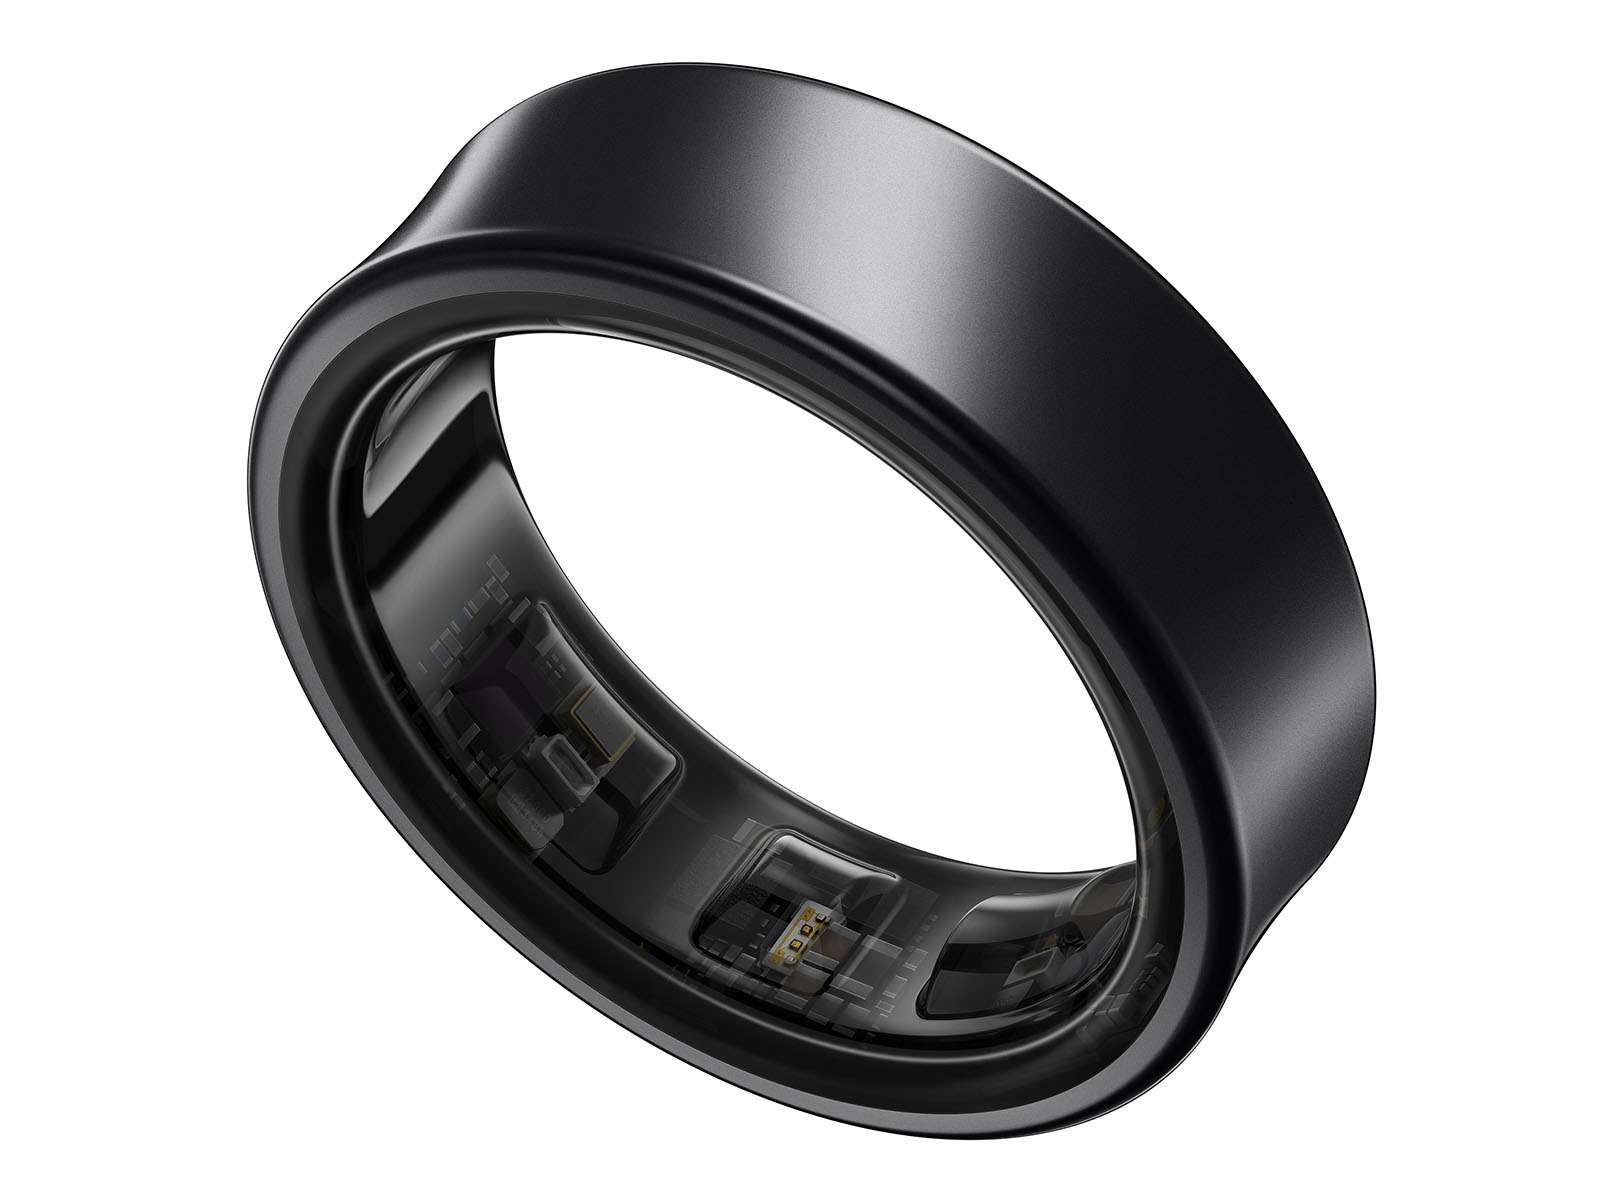 Thumbnail image of Galaxy Ring, Size 8, Titanium Black